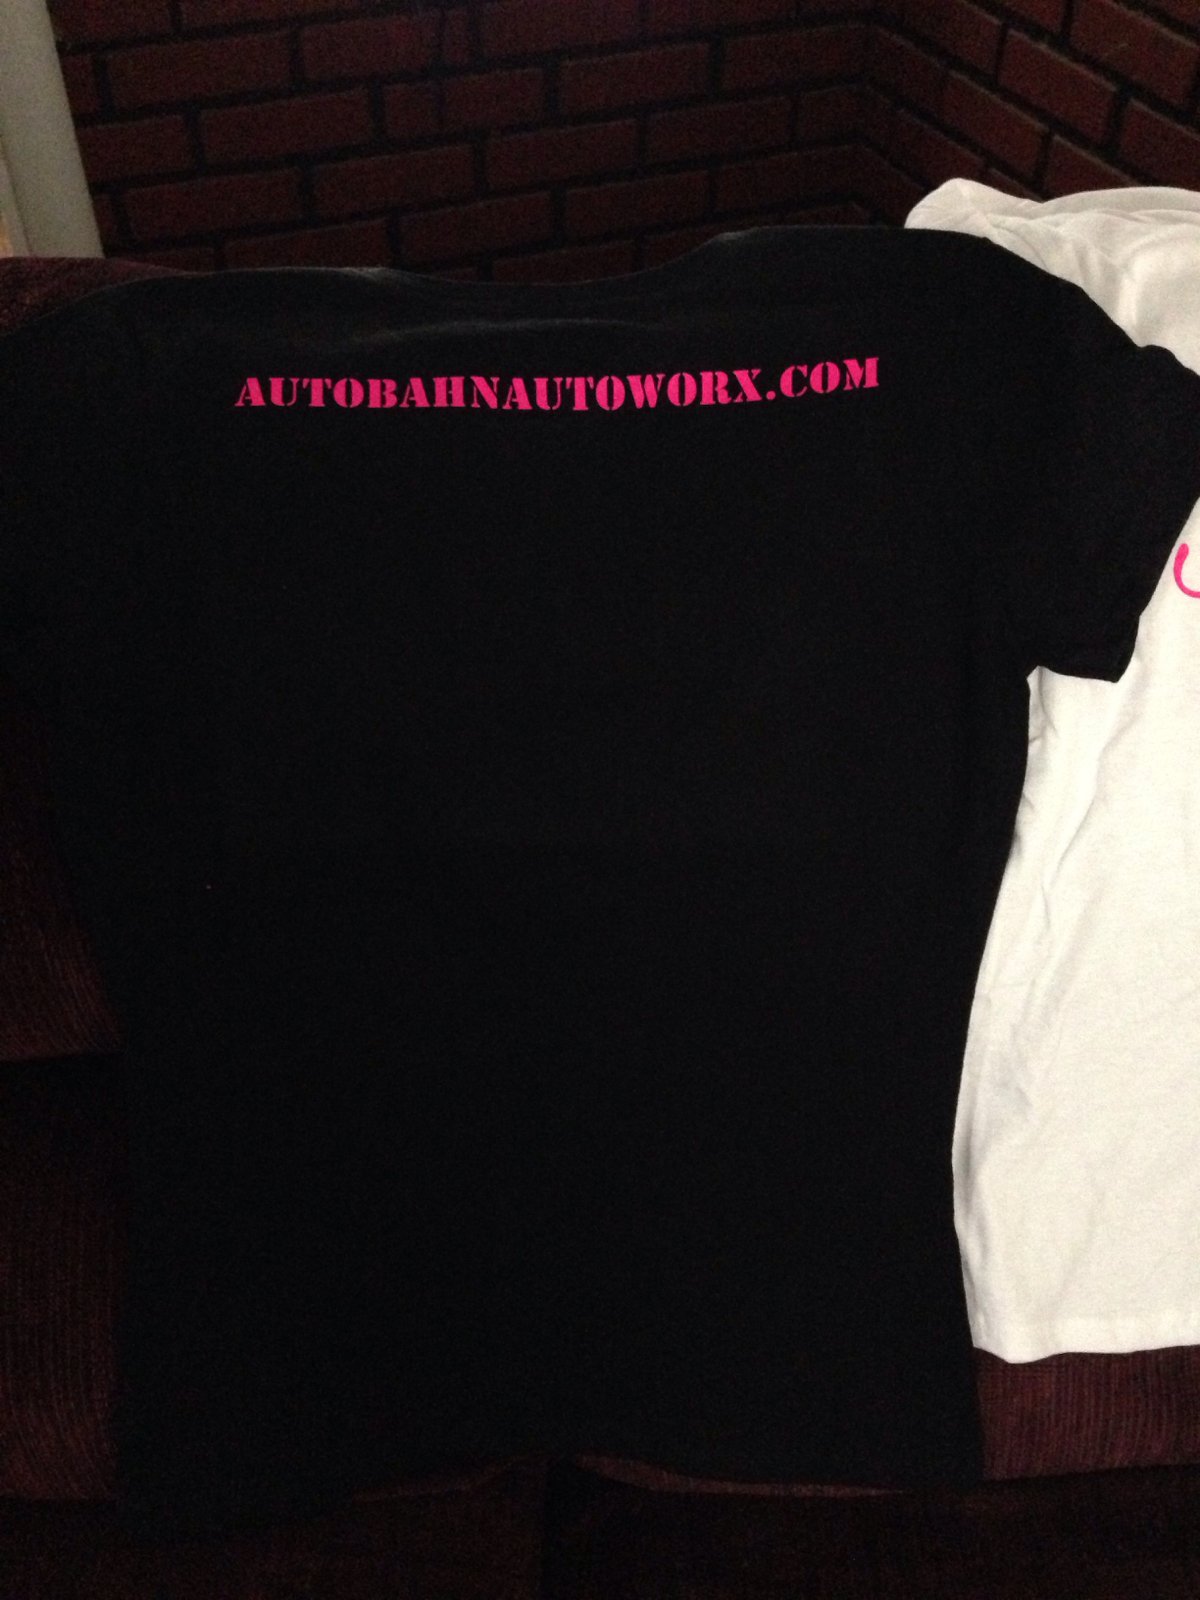 Scene Queen t-shirt - Autobahn Autoworx